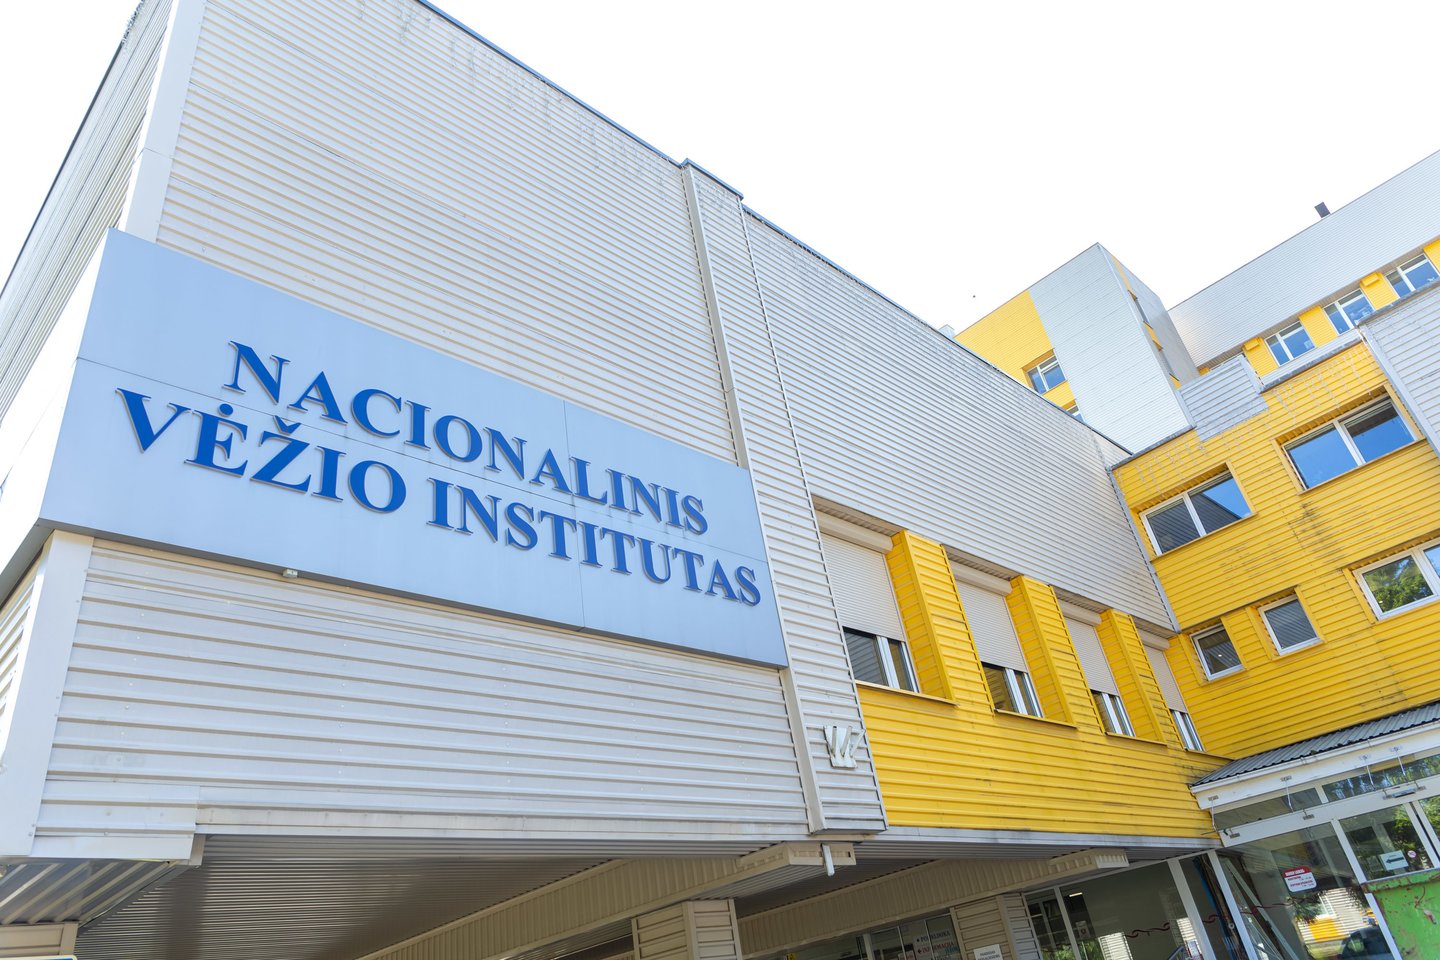 Nacionalinis vėžio institutas<br>E. Khvashchynskayos (ELTA) nuotr.